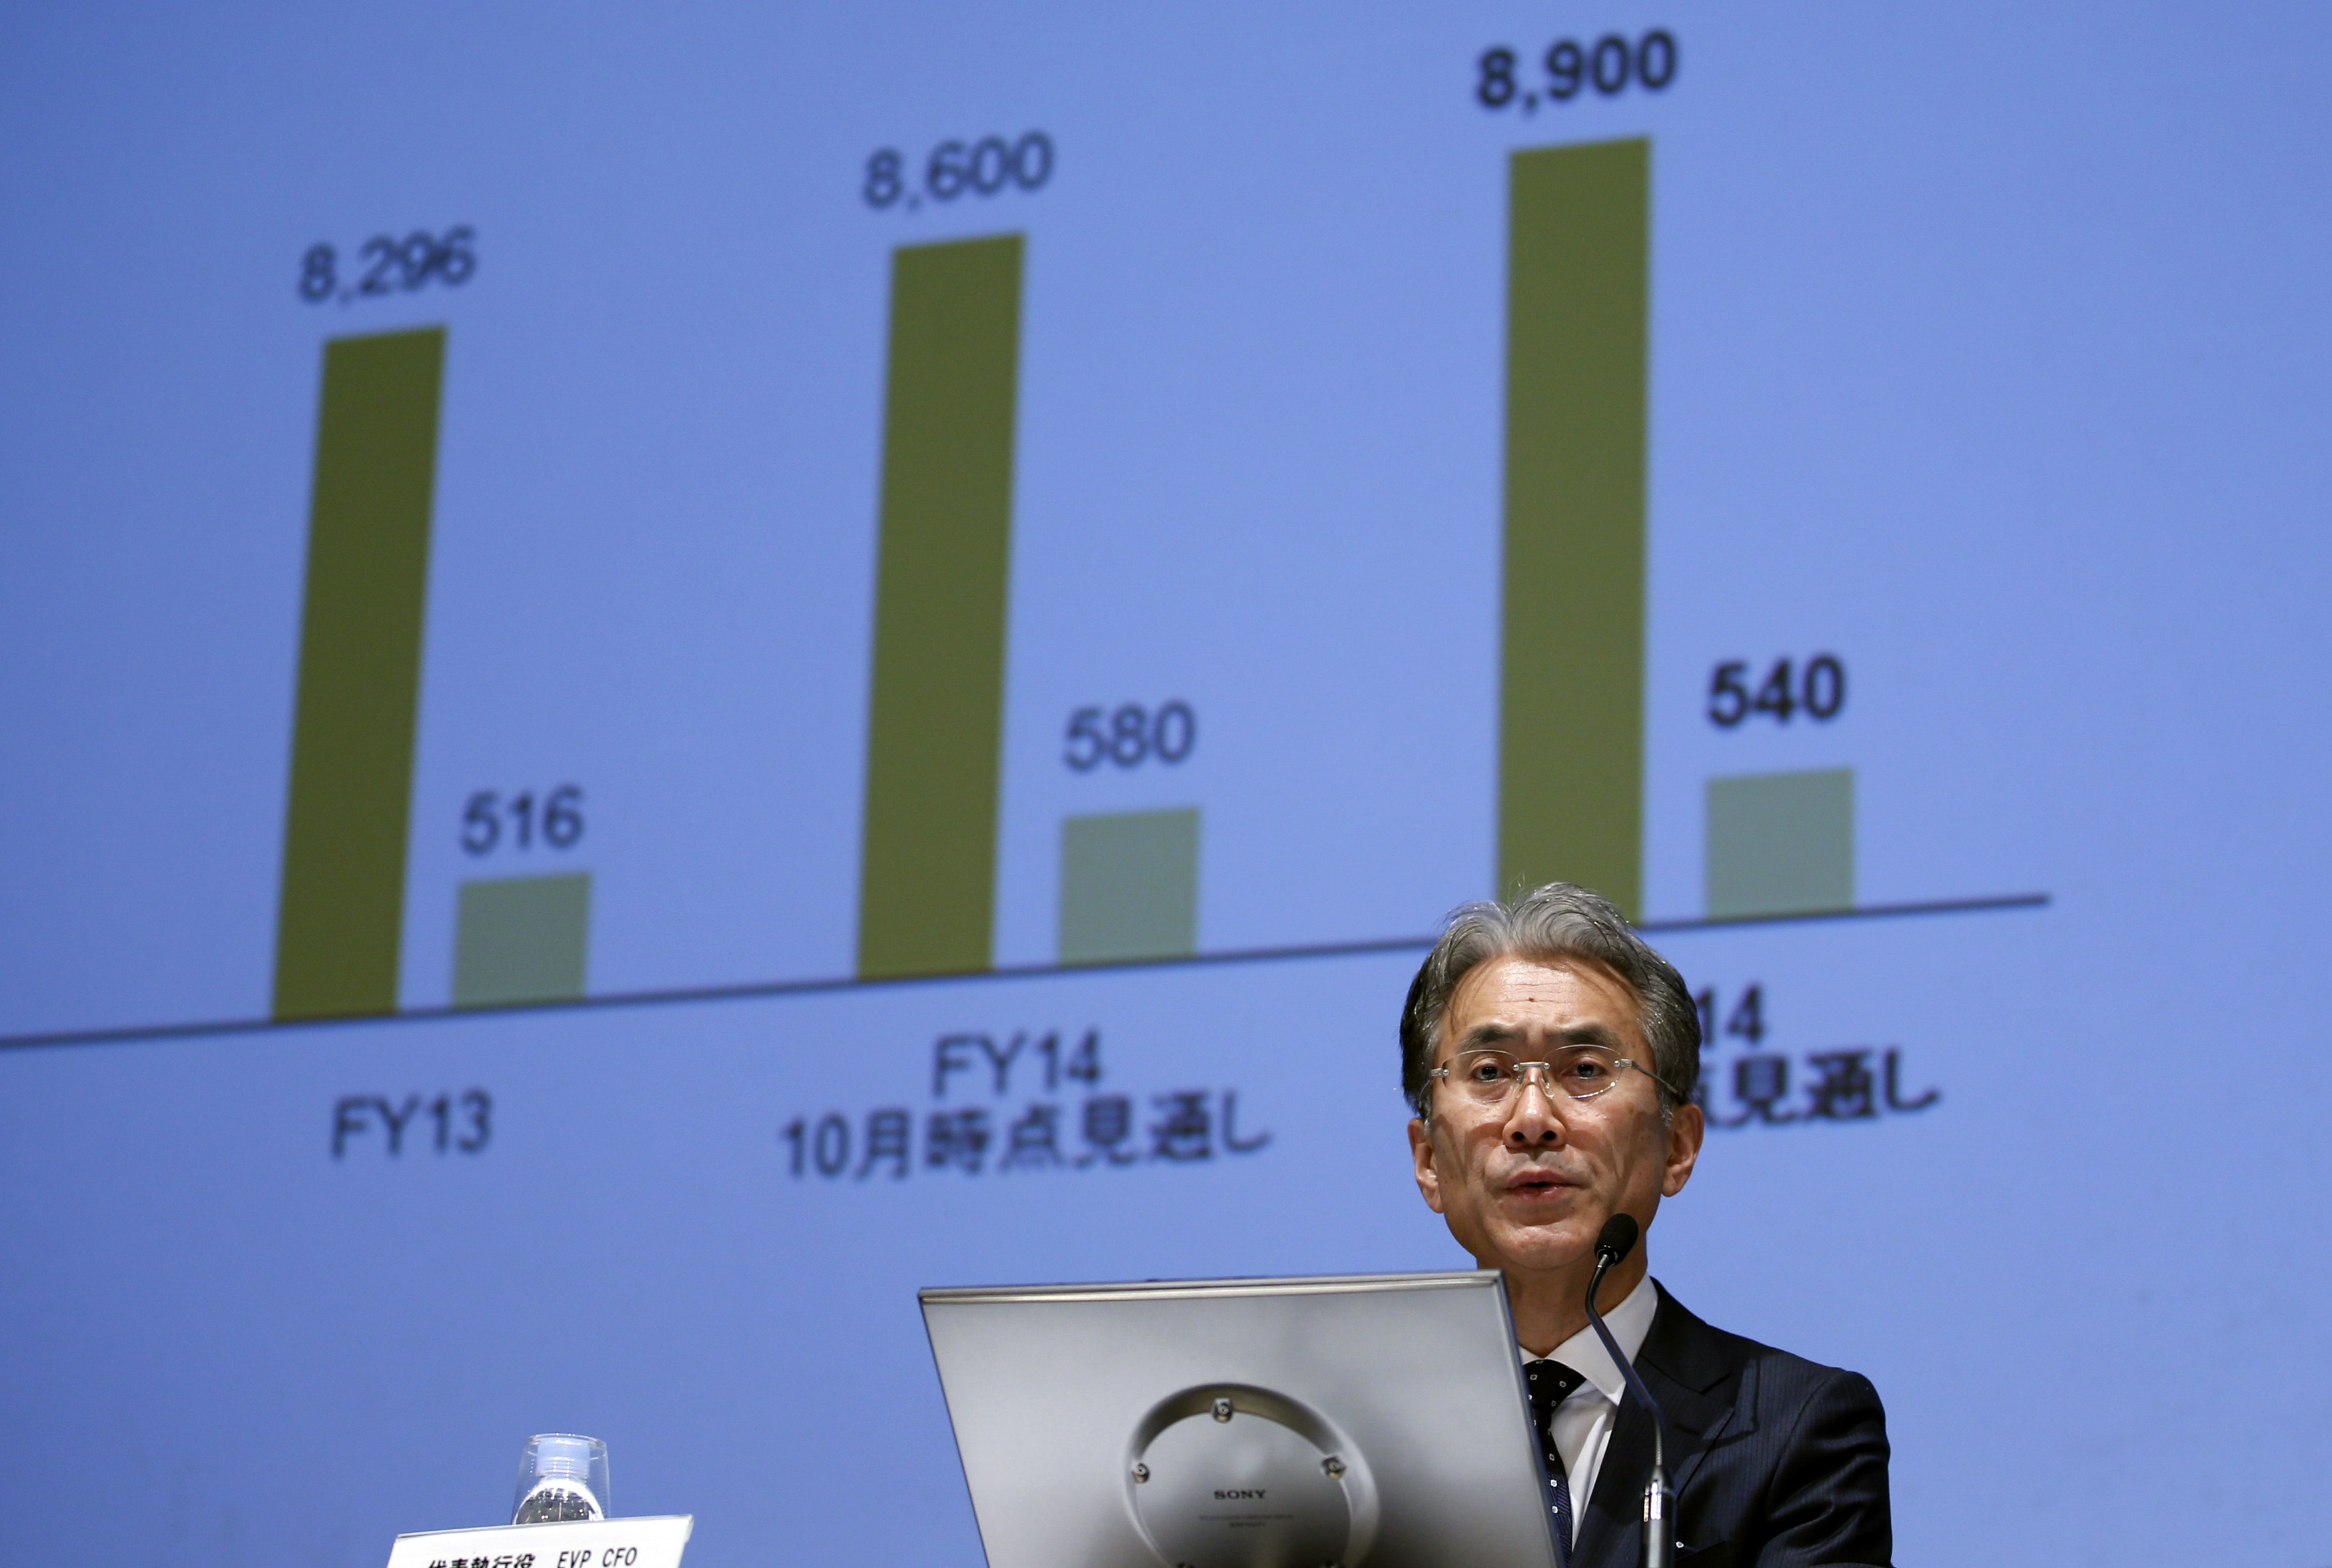 CFO Yoshida's Sony revamp wins over investors, tough decisions loom